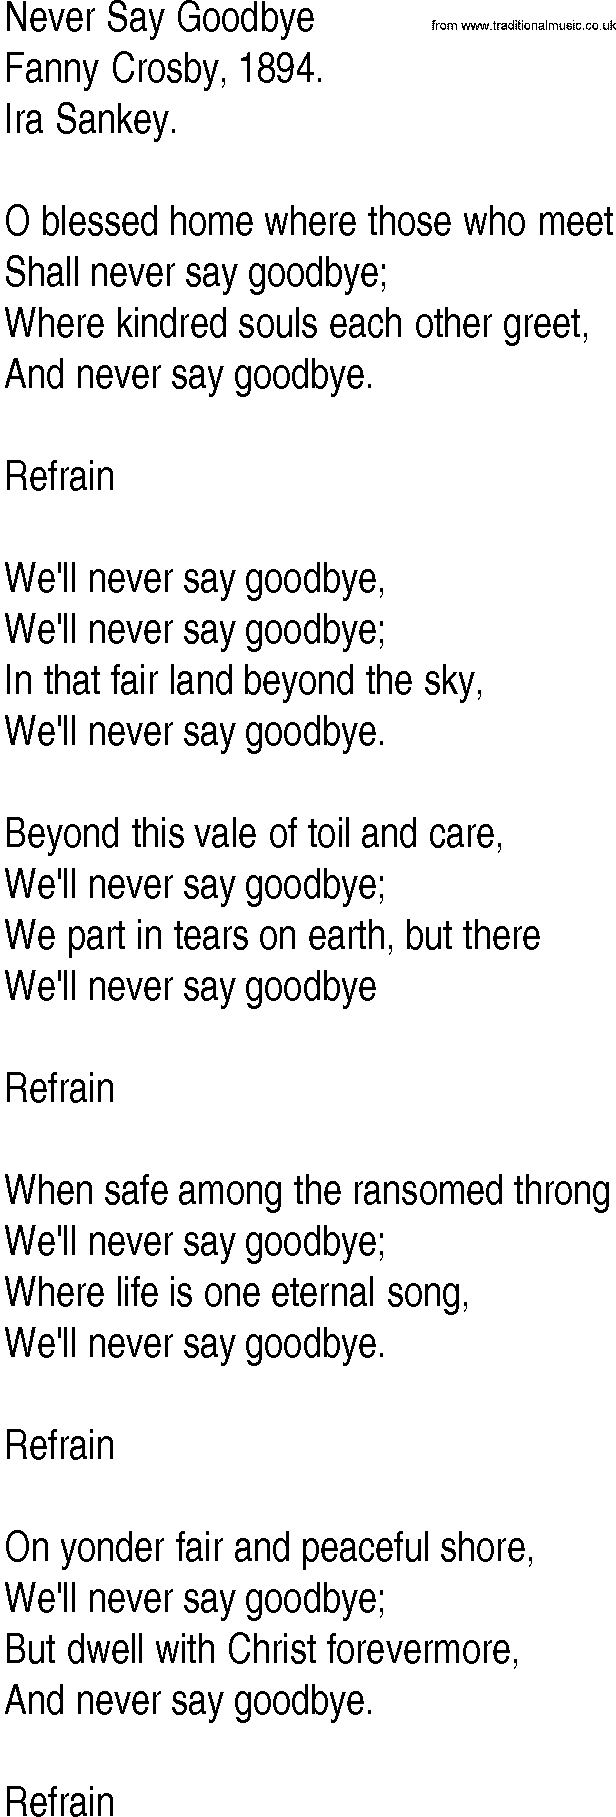 Hymn and Gospel Song: Never Say Goodbye by Fanny Crosby lyrics